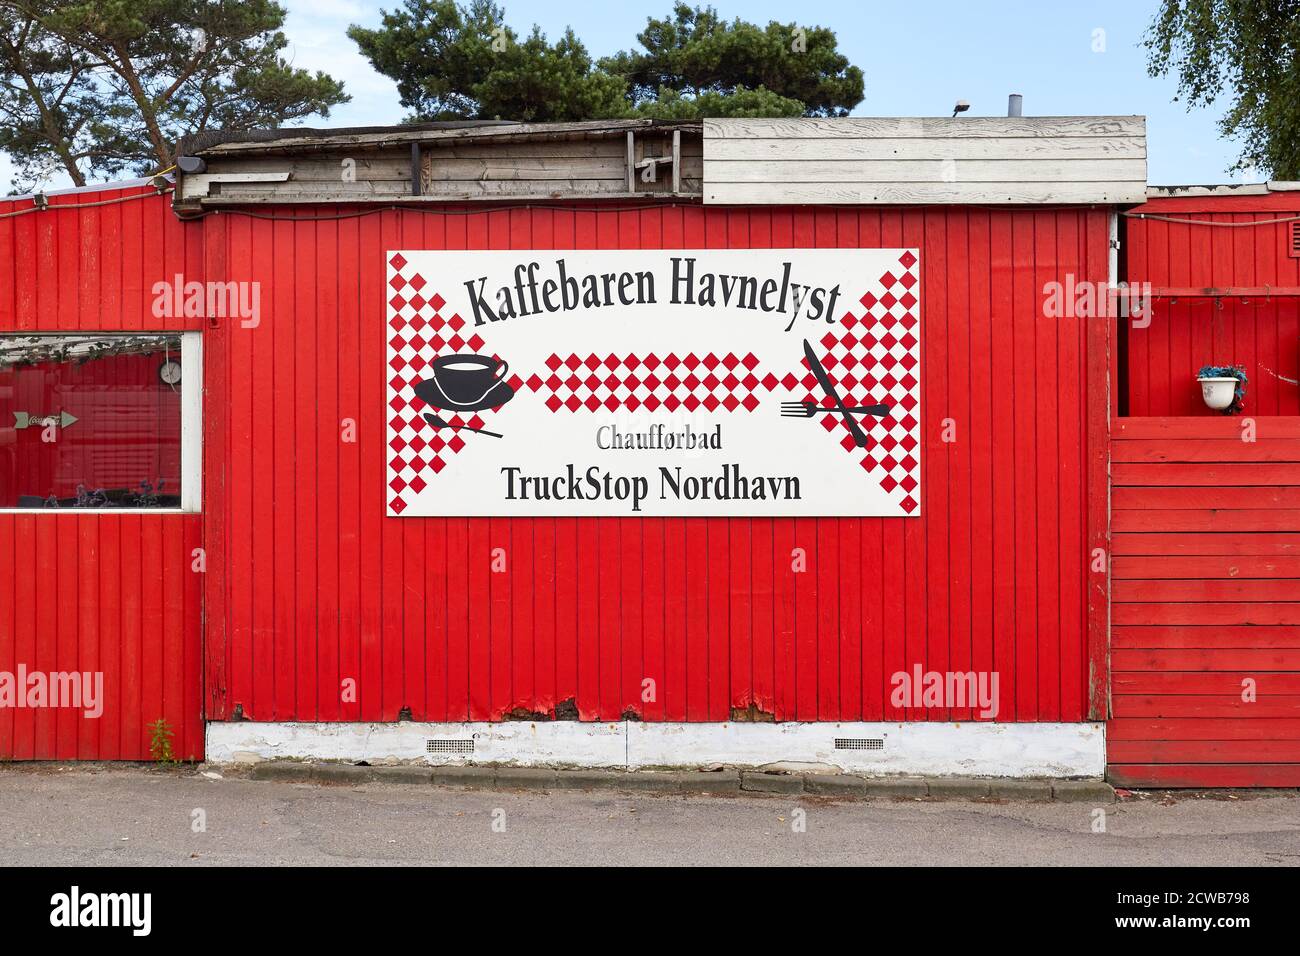 "Kaffebaren Havnelyst. Chaufførbad. Truckstop Nordhavn', bar e ristorante, ora demolito, nel Nordhavn di Copenhagen; Danimarca Foto Stock